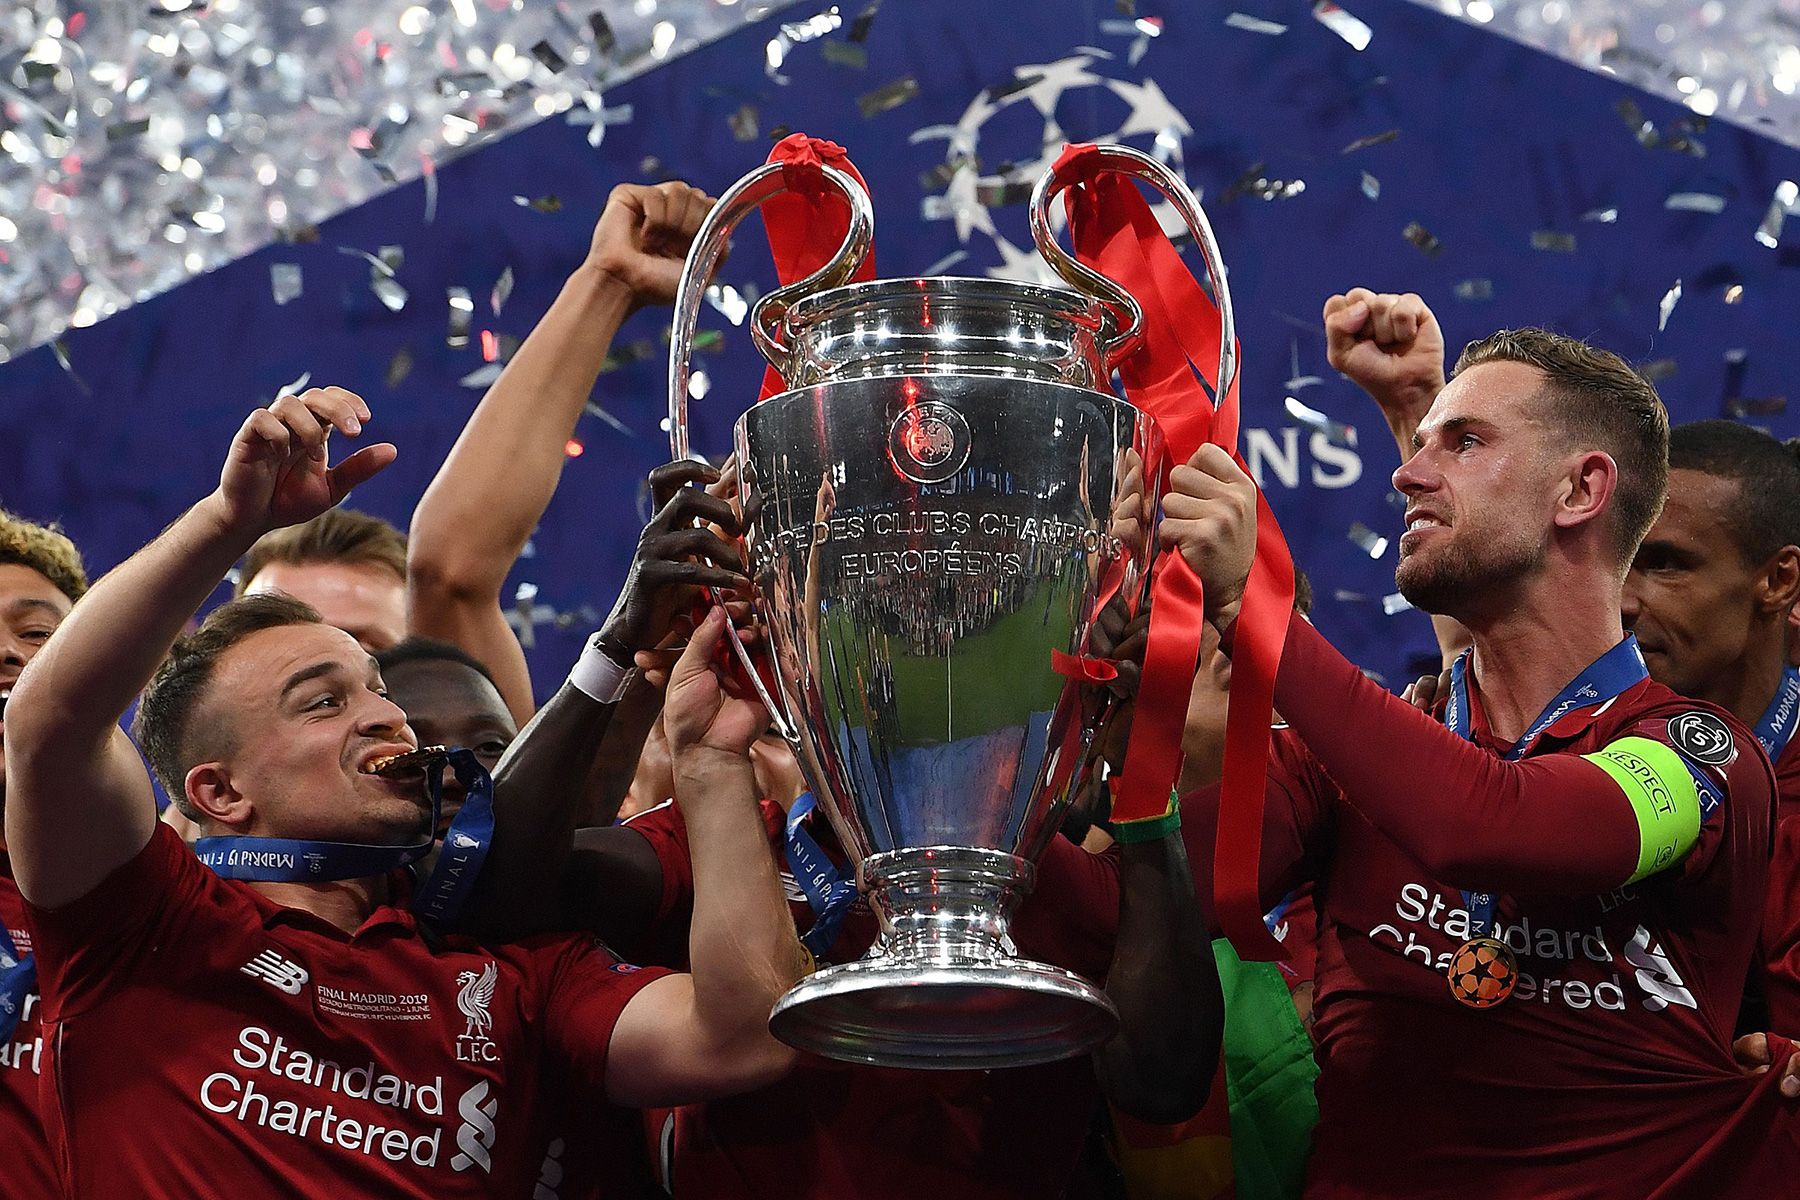 The Liverpool celebrates his last Champions League